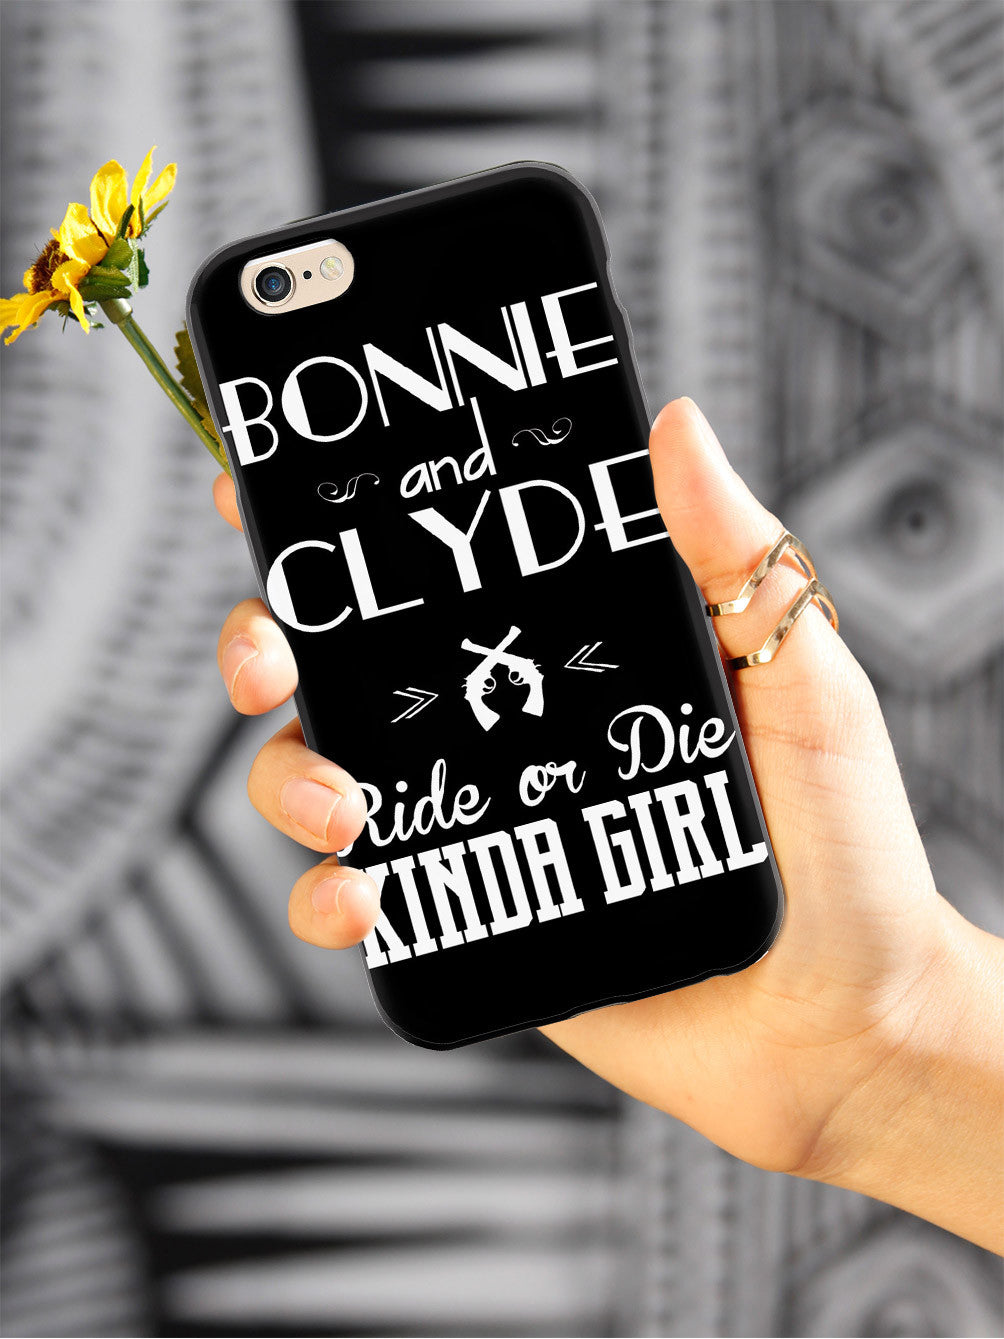 Bonnie & Clyde - Ride or Die Kinda Girl Case